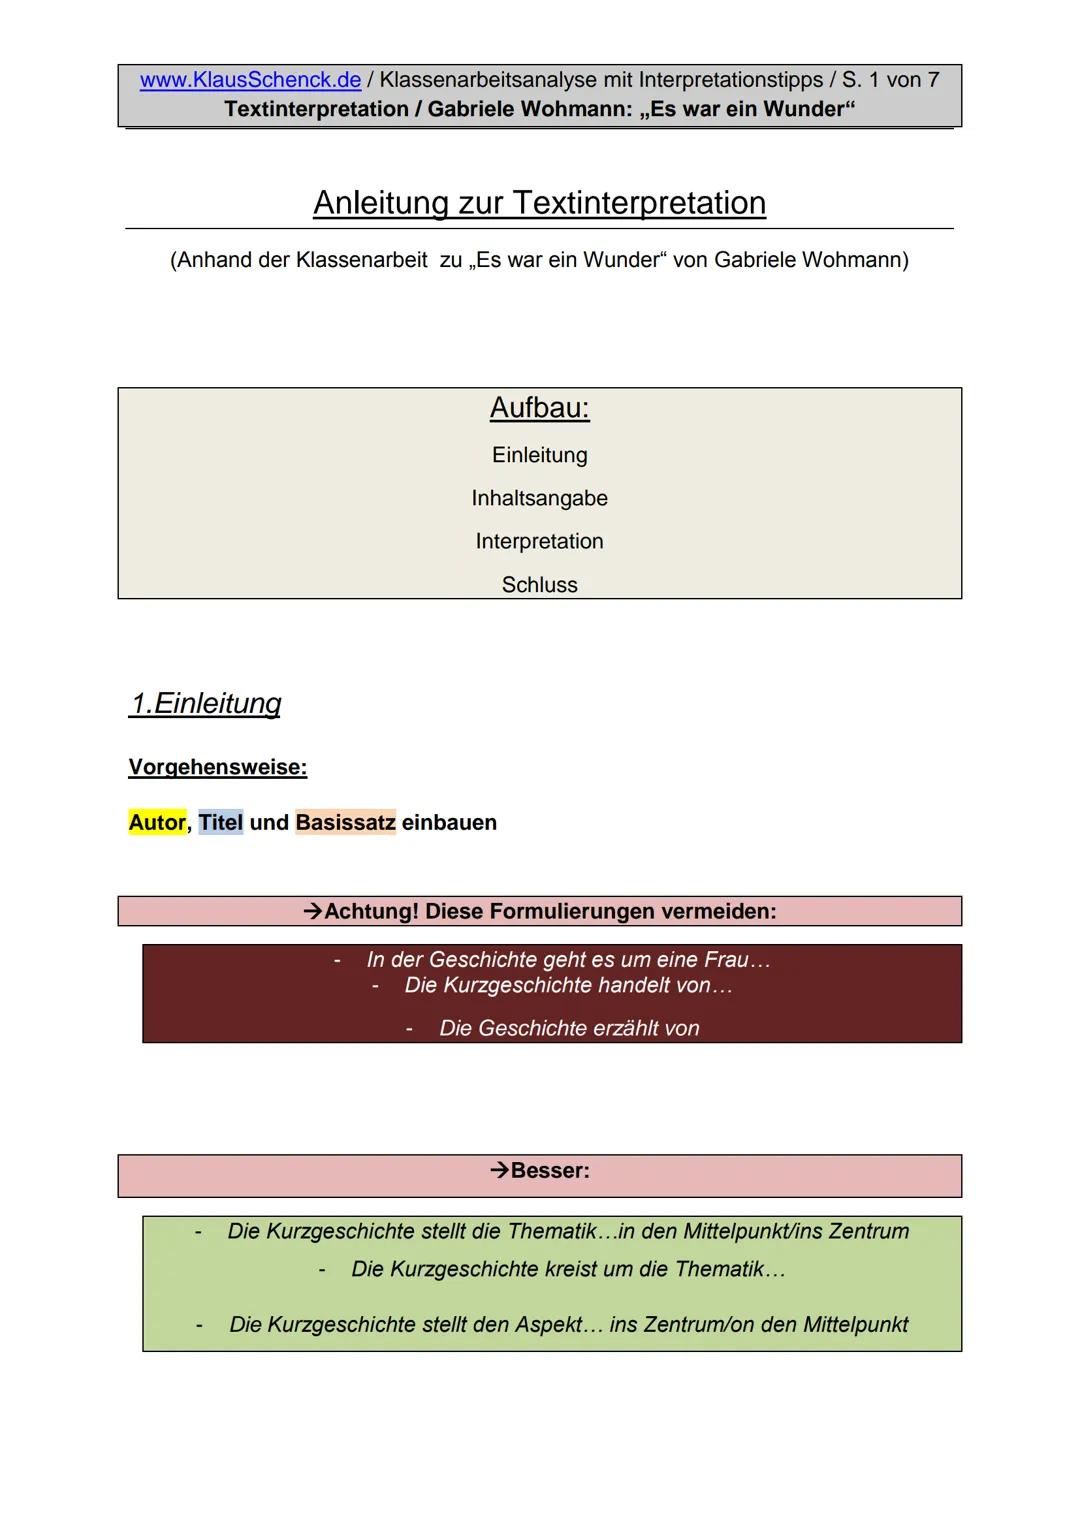 www.KlausSchenck.de / Deutsch-Abi-Training: Textinterpretation / S. 1
Textinterpretation / Prosa (Aufgabe II)
Hm, Textinterpretation, mal ga